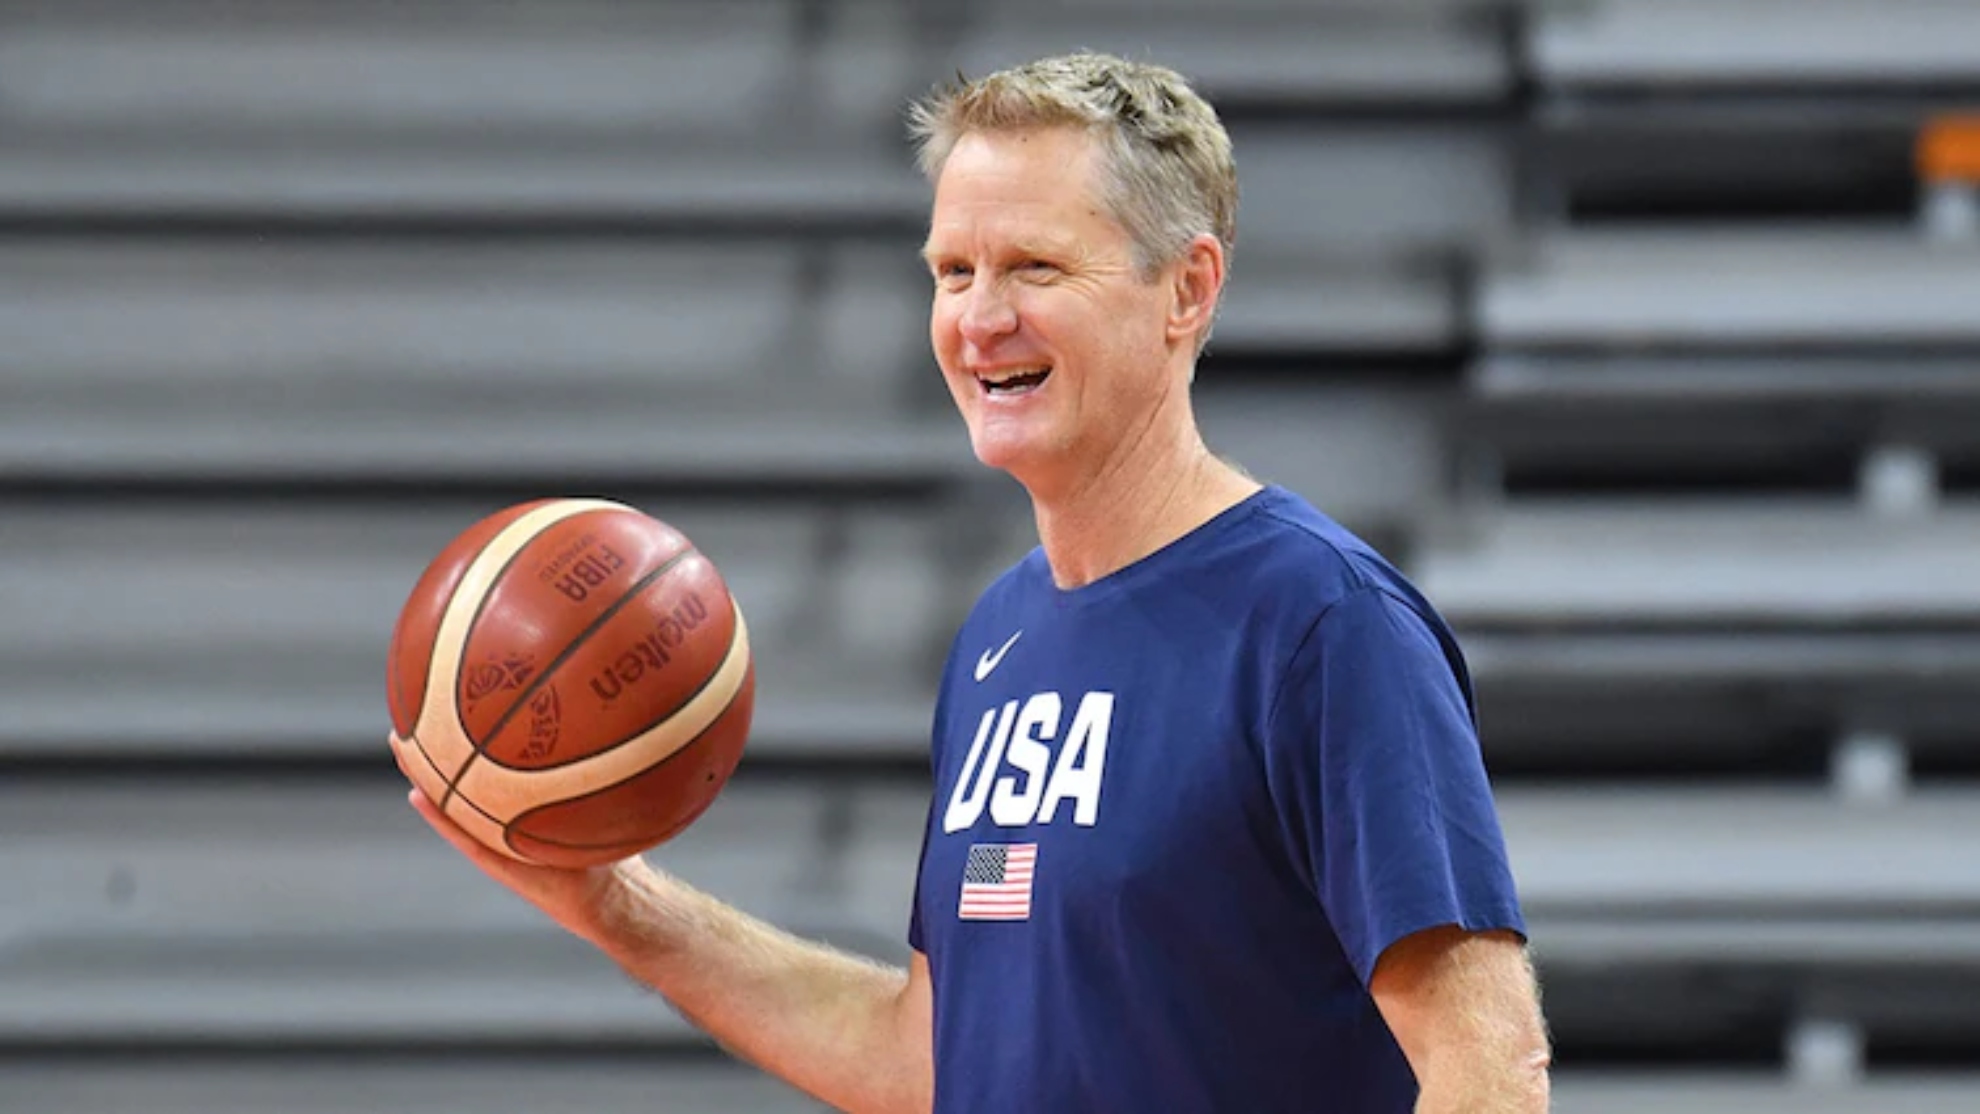 Warriors' Steve Kerr introduced as new USA national basketball team coach |  Marca